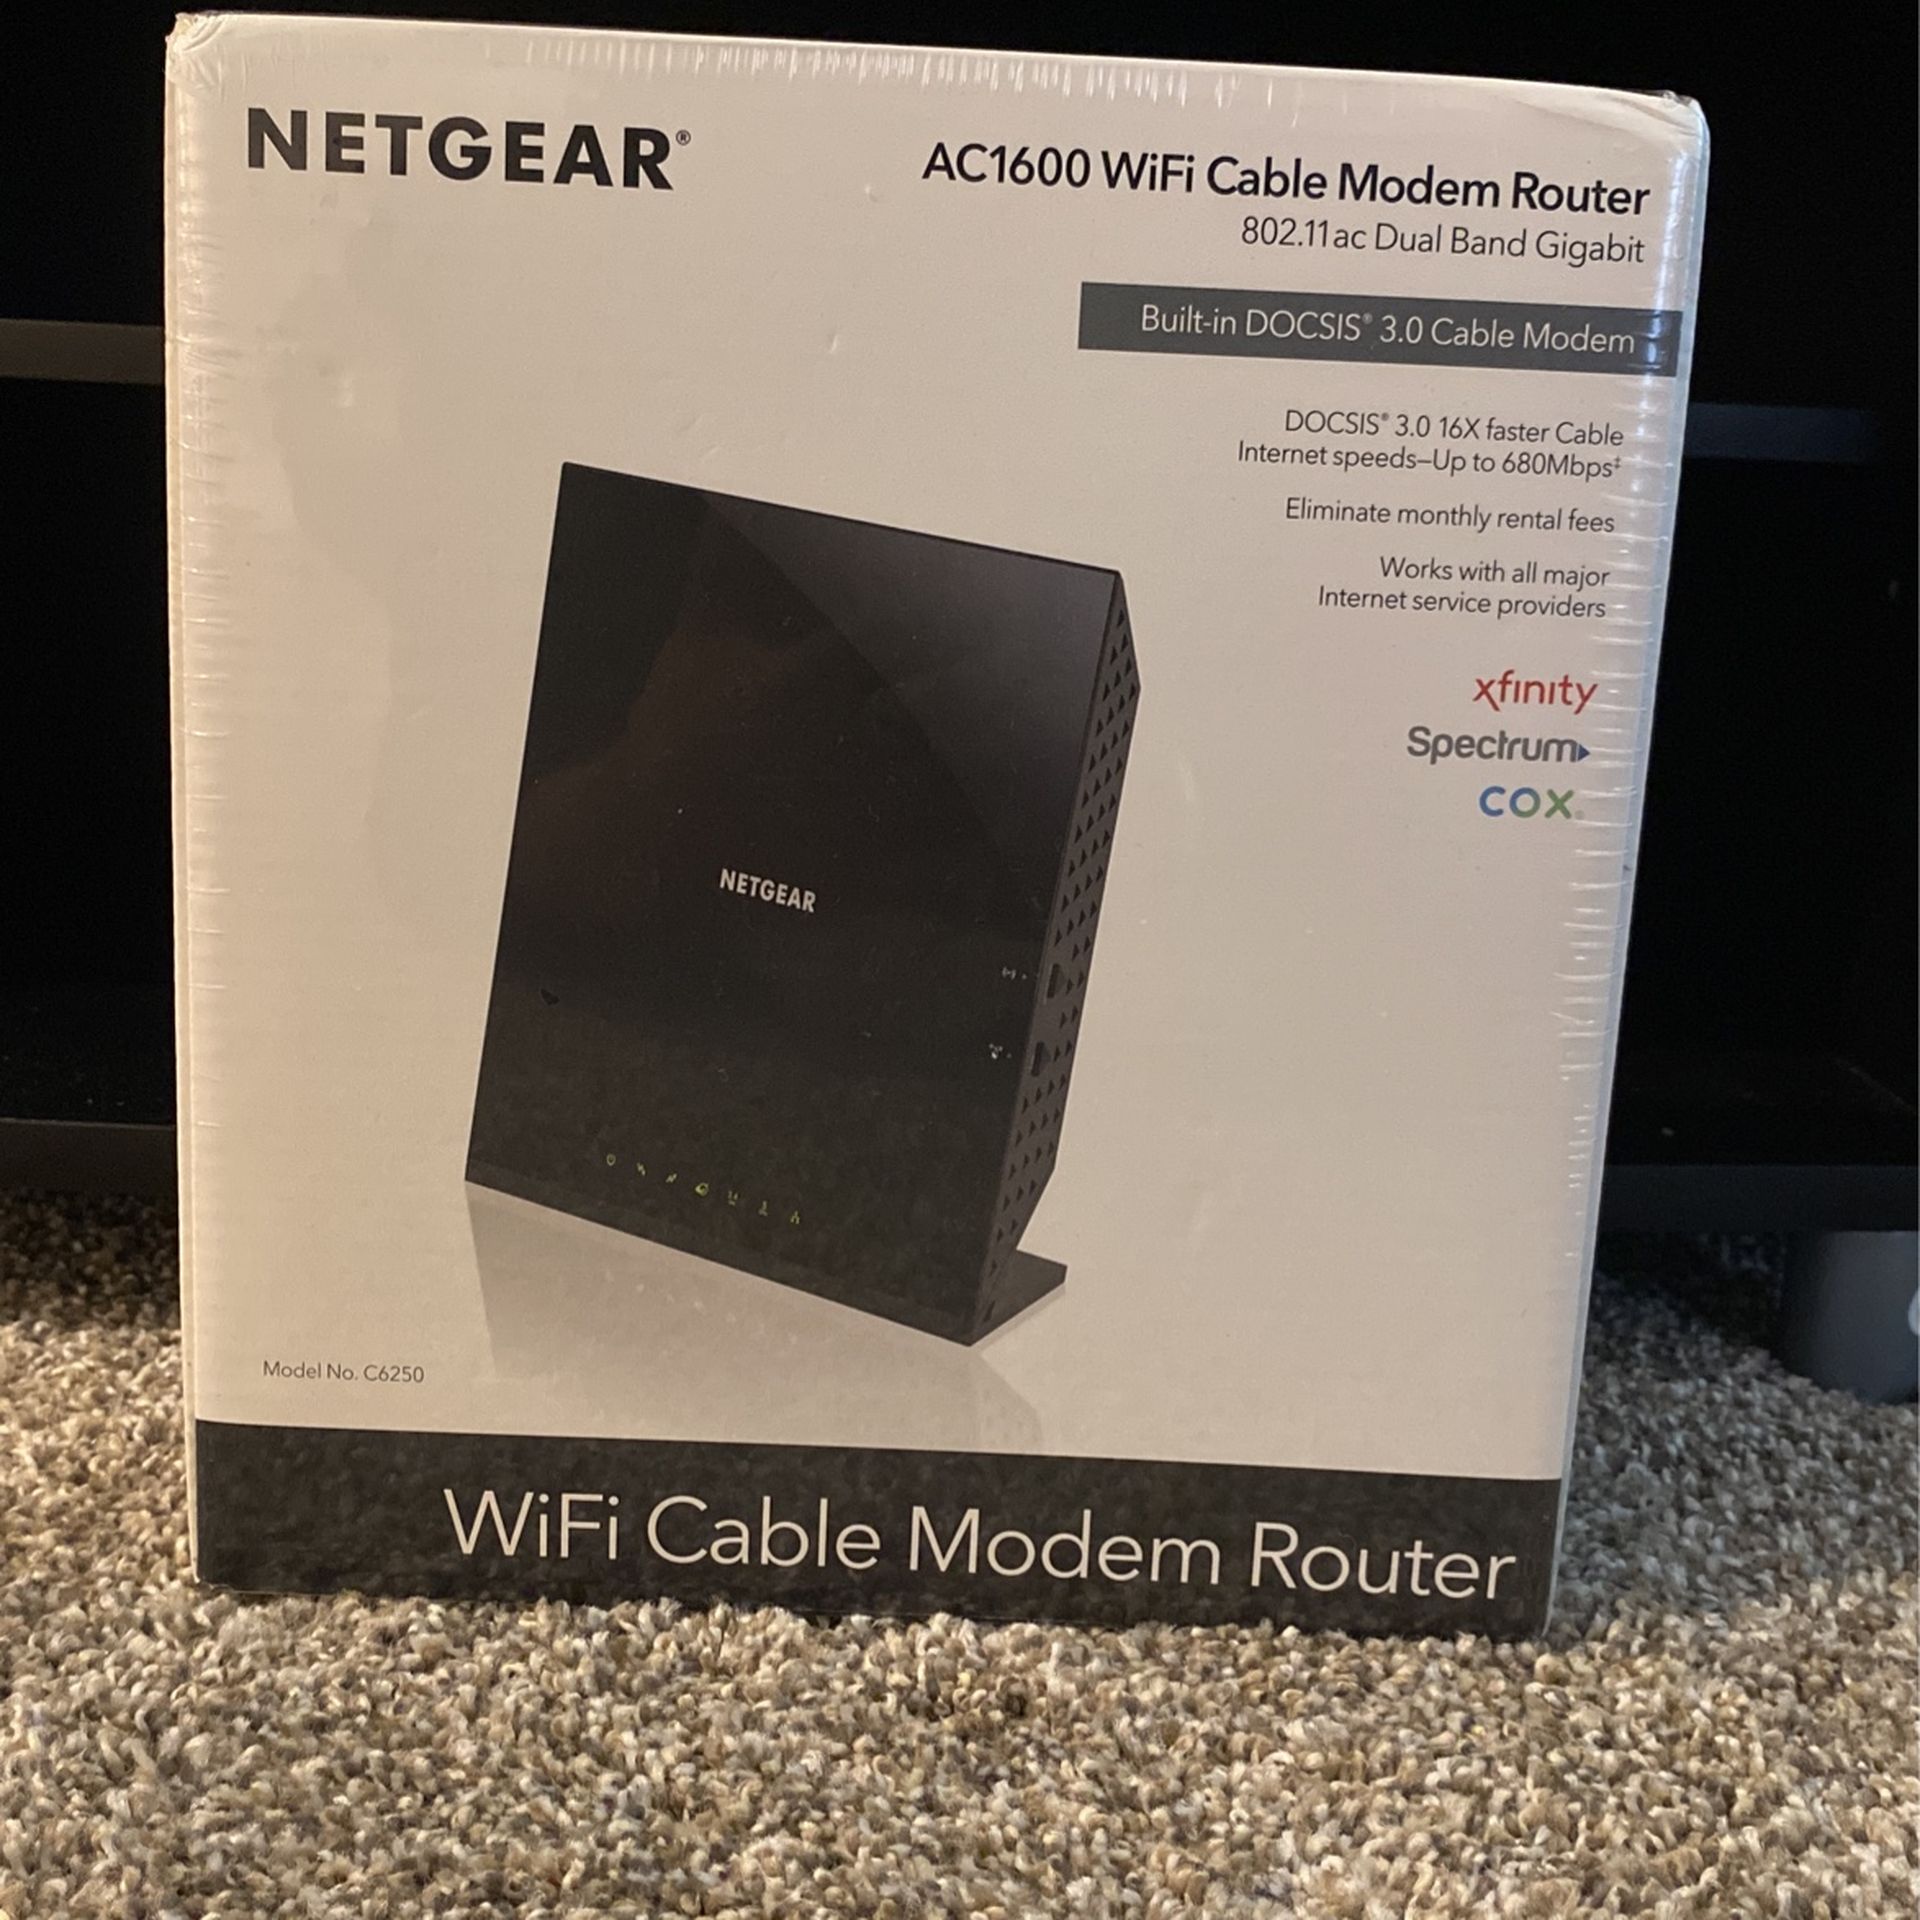 NetGear - AC1600 WiFi Cable Modem Router 802.11 ac Dual Band Gigabit